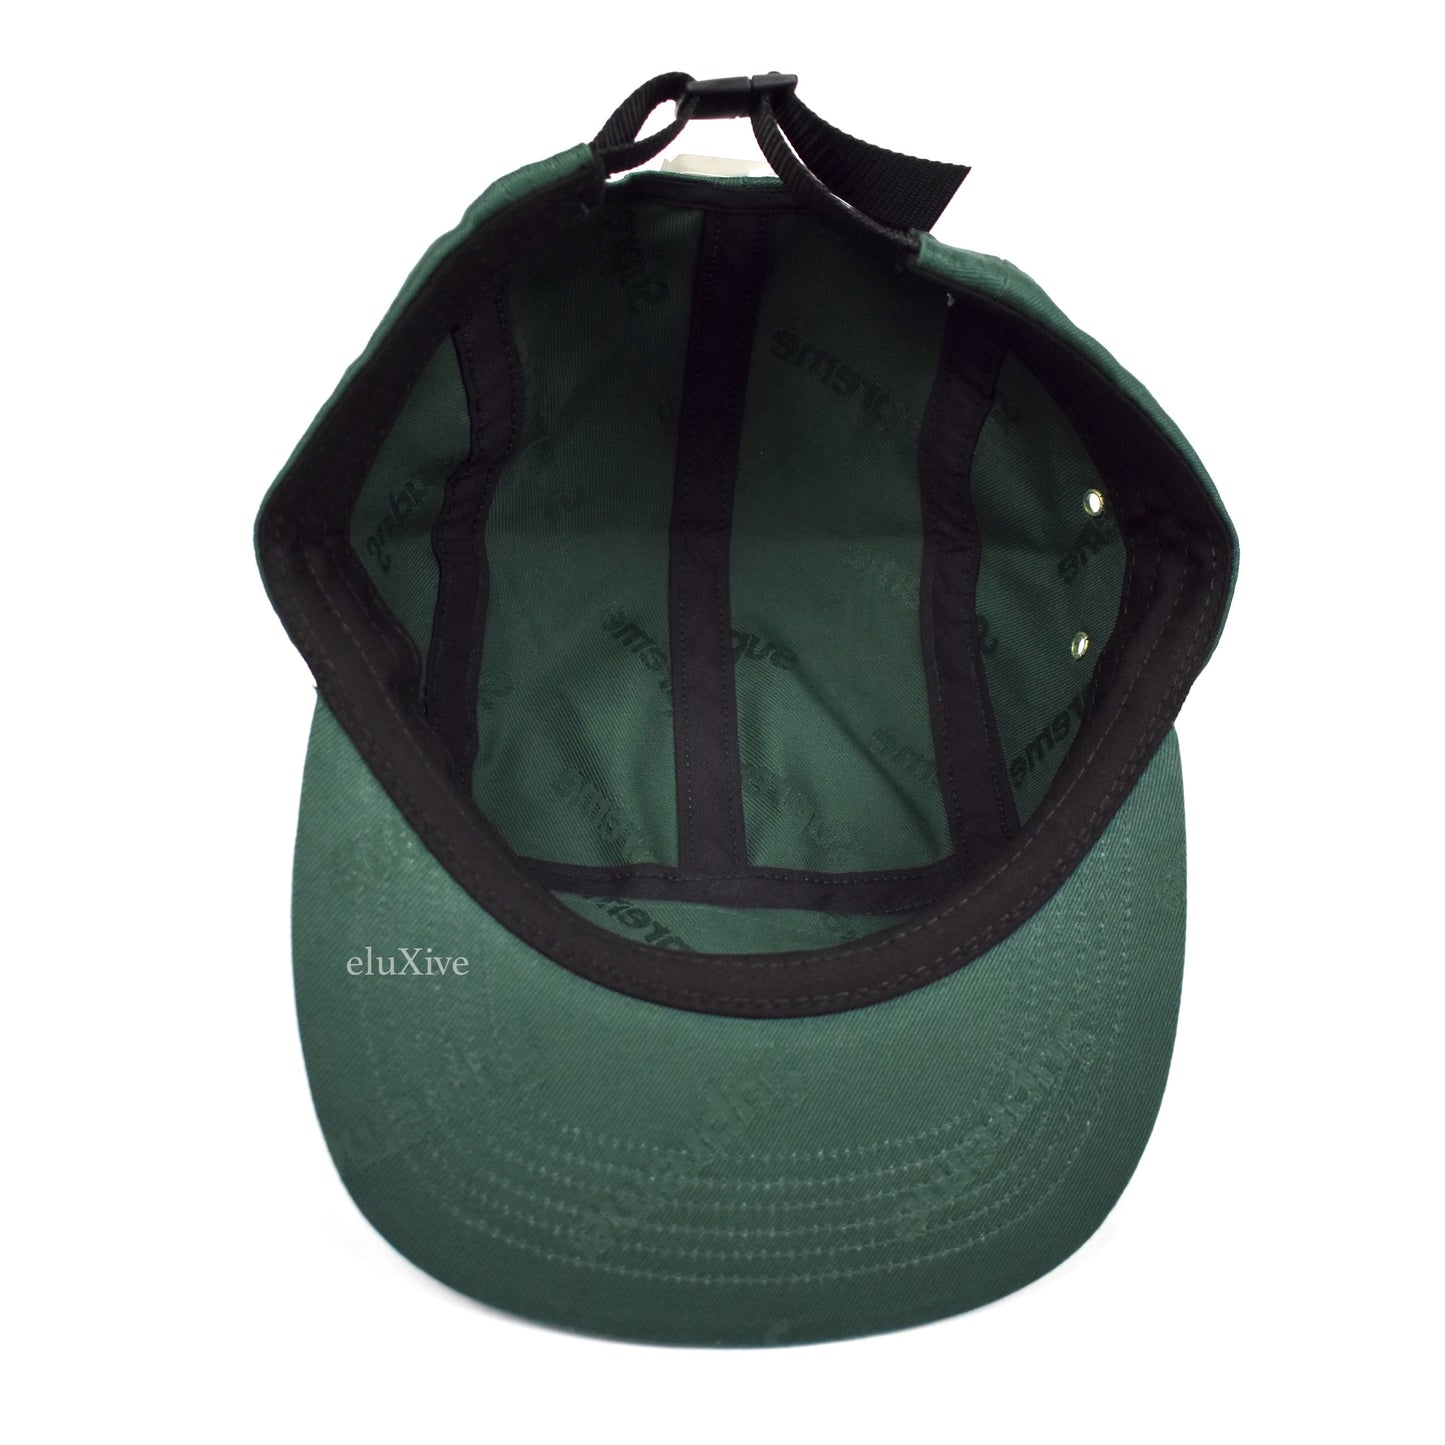 Supreme - Dark Green Box Logo Jacquard Hat